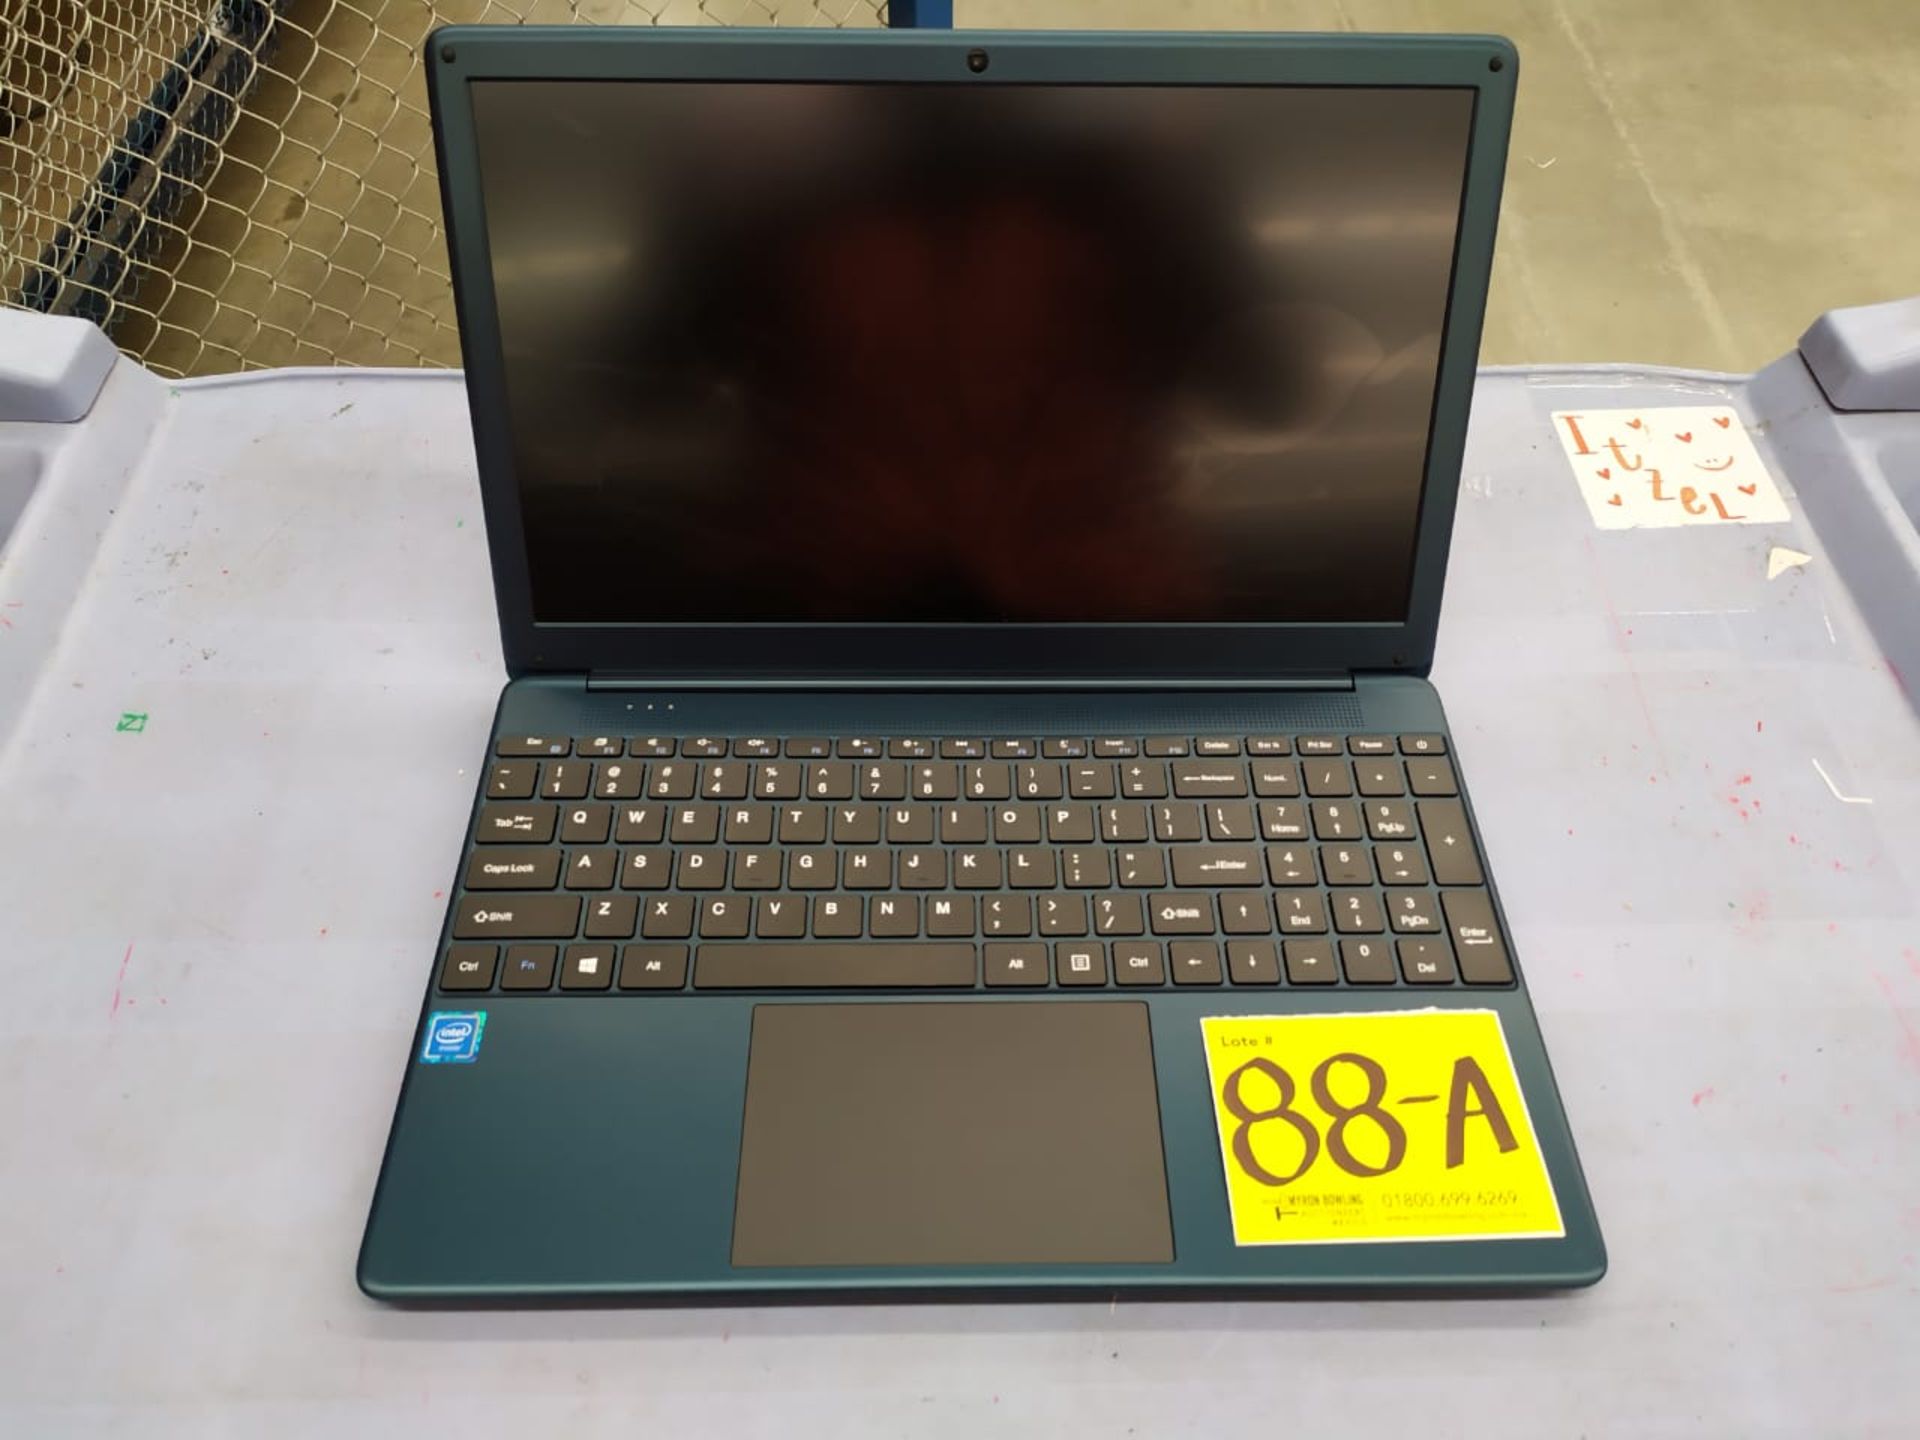 2 Computadoras tipo Laptop marca Evoo modelo EVC156-1 N/S EVC156-1BL20J01189